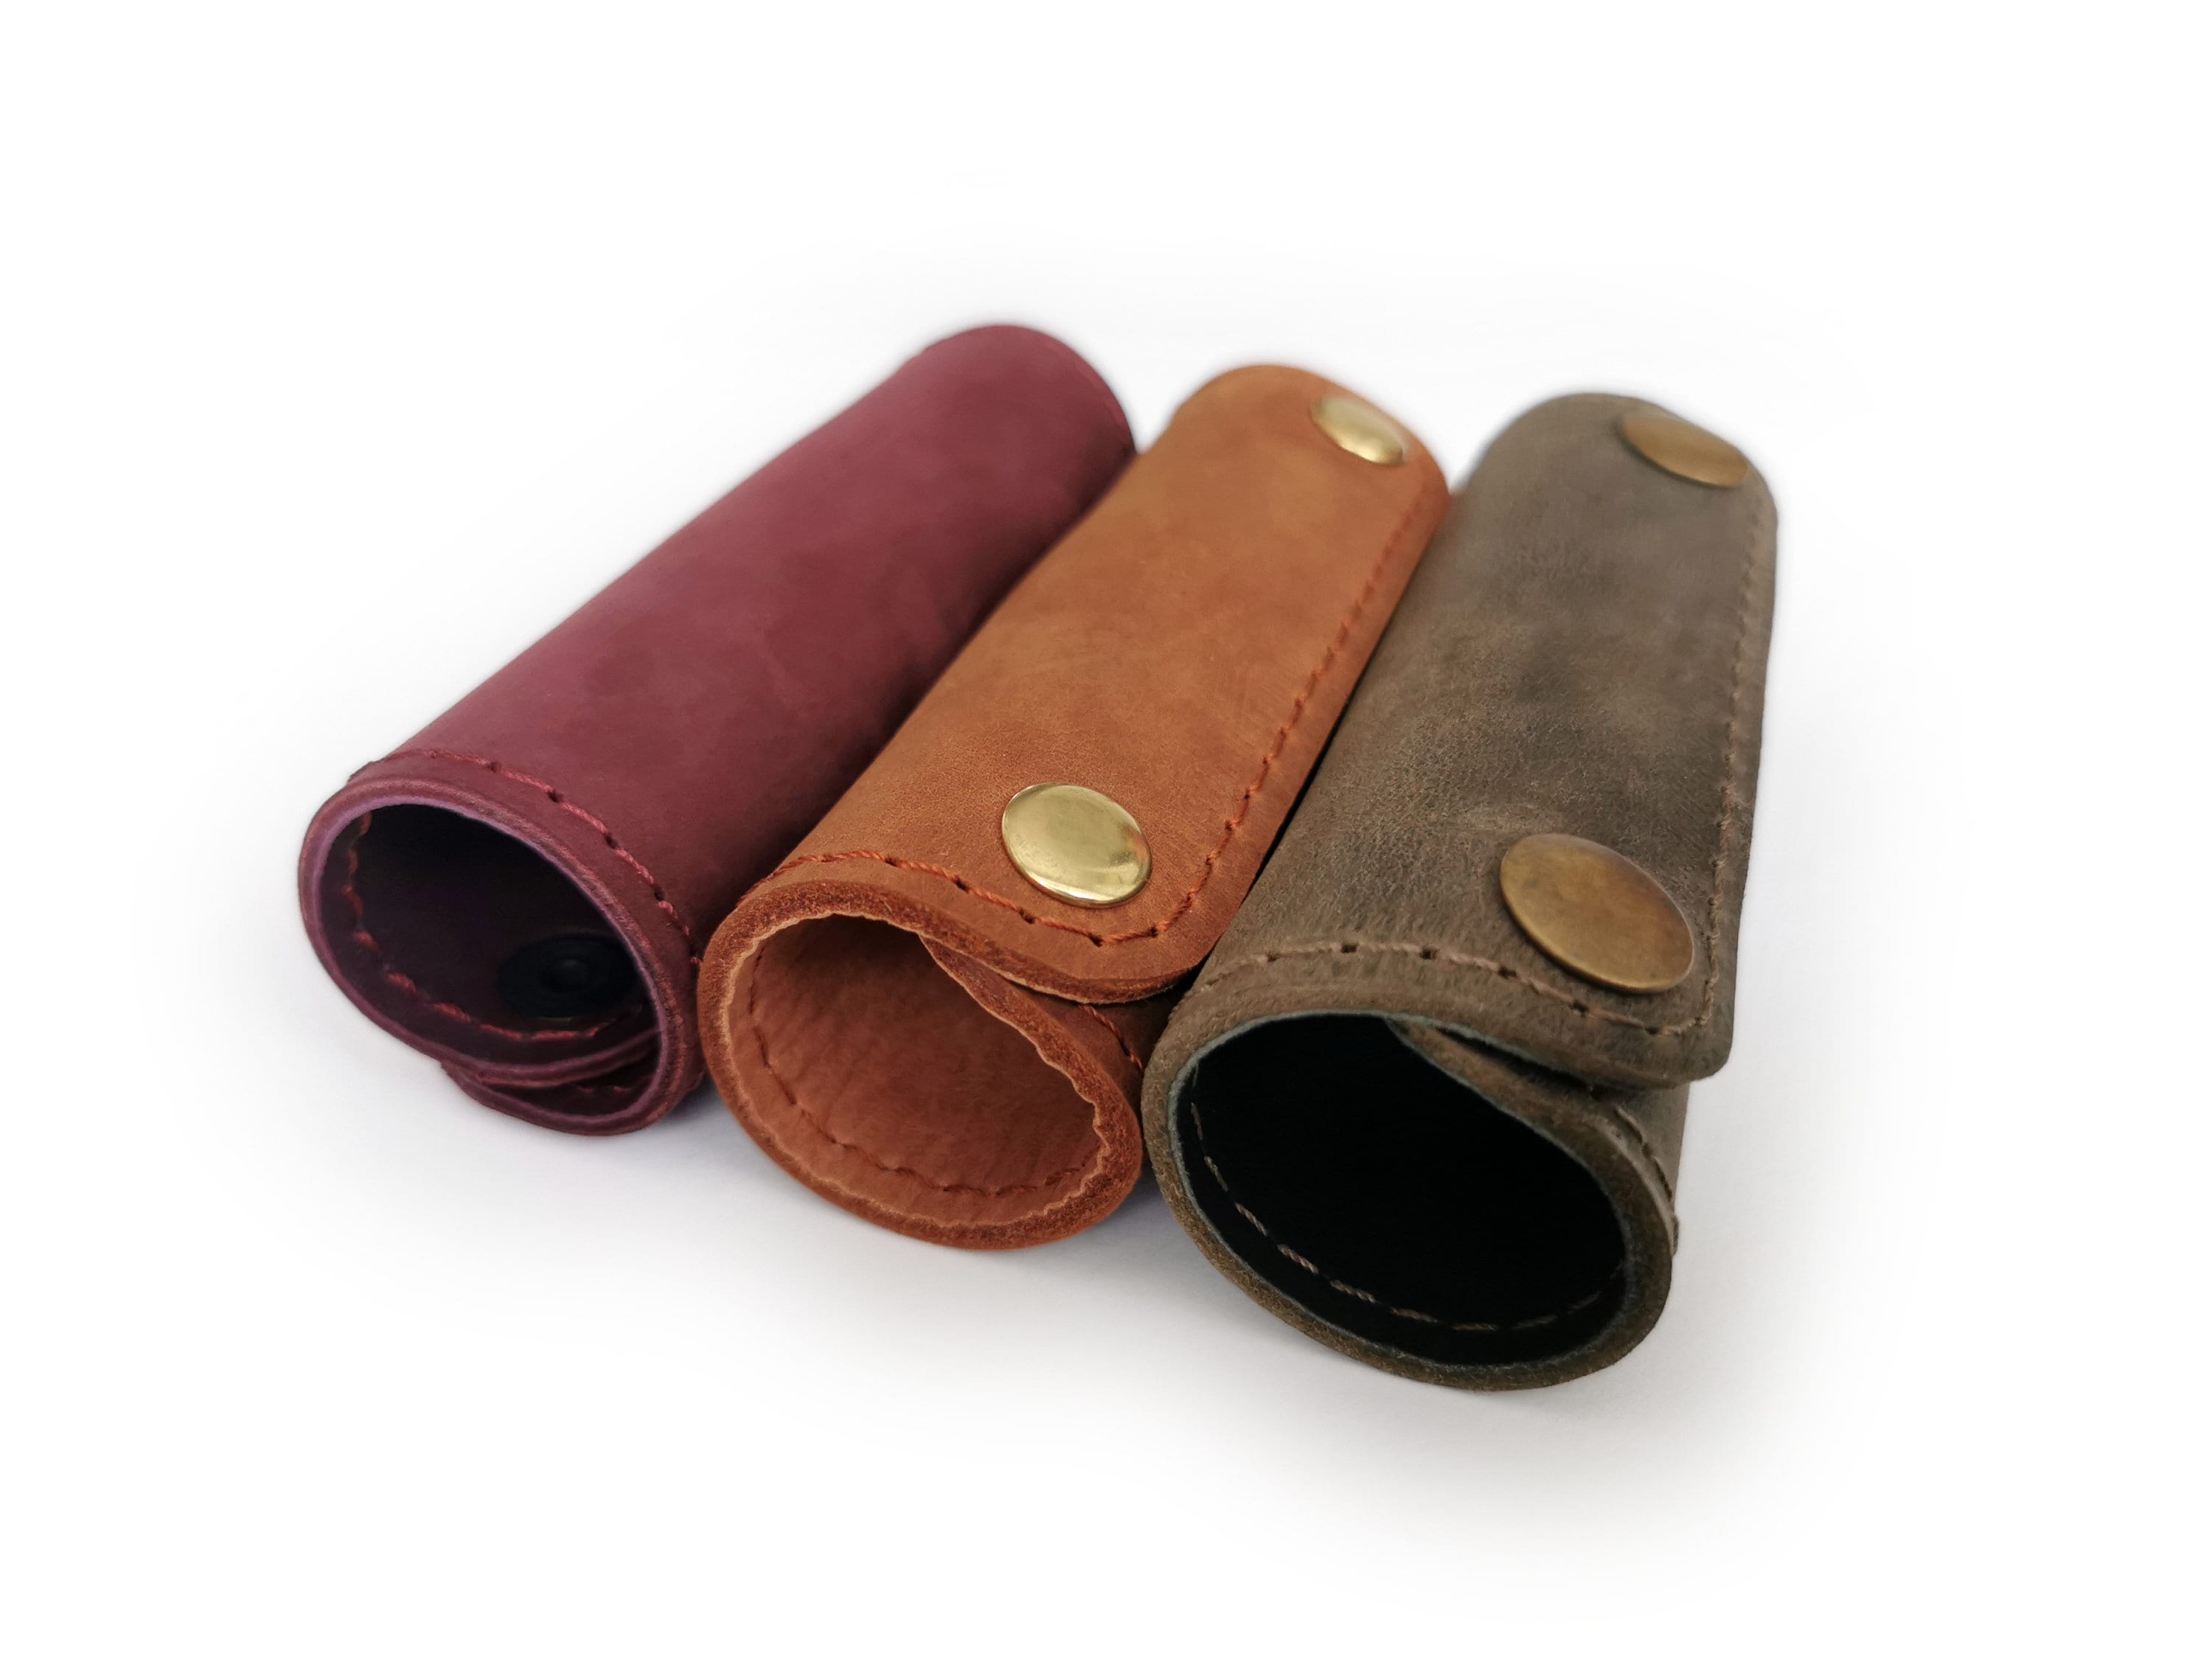  FVVMEED 4 Pairs Handbag Handle Leather Wrap Covers